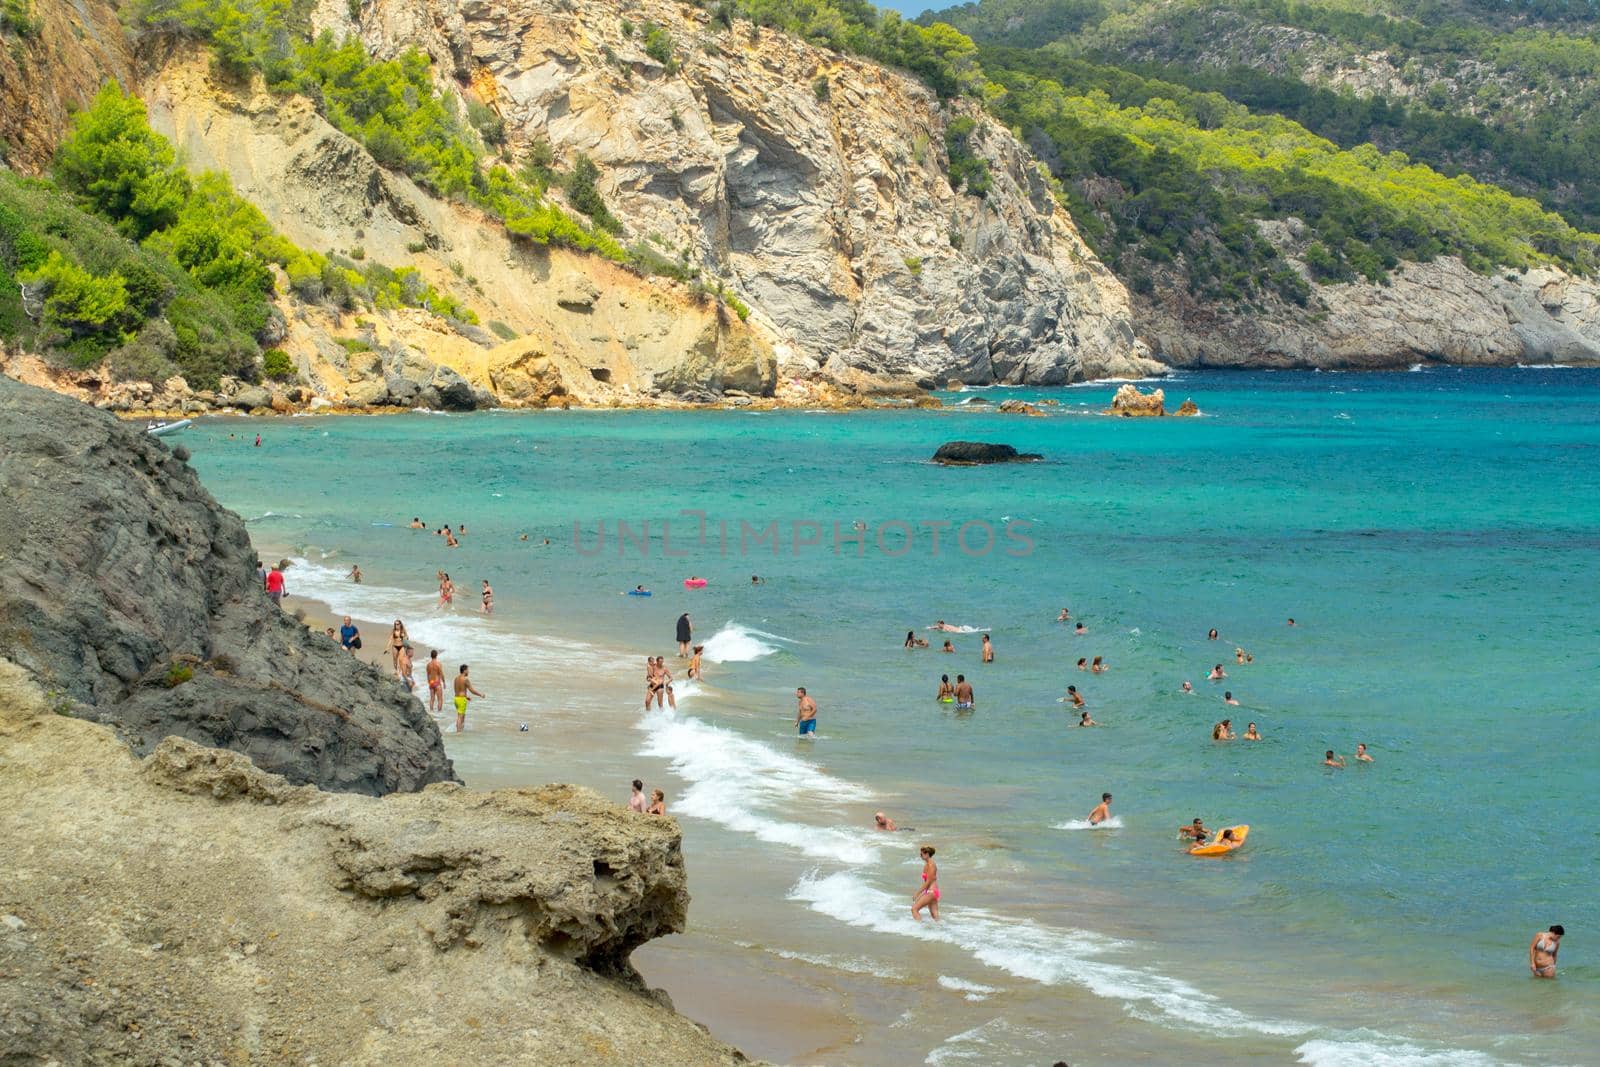 Beautiful day in Aigues Blanques, Santa Eulalia des Riu, Ibiza. by martinscphoto